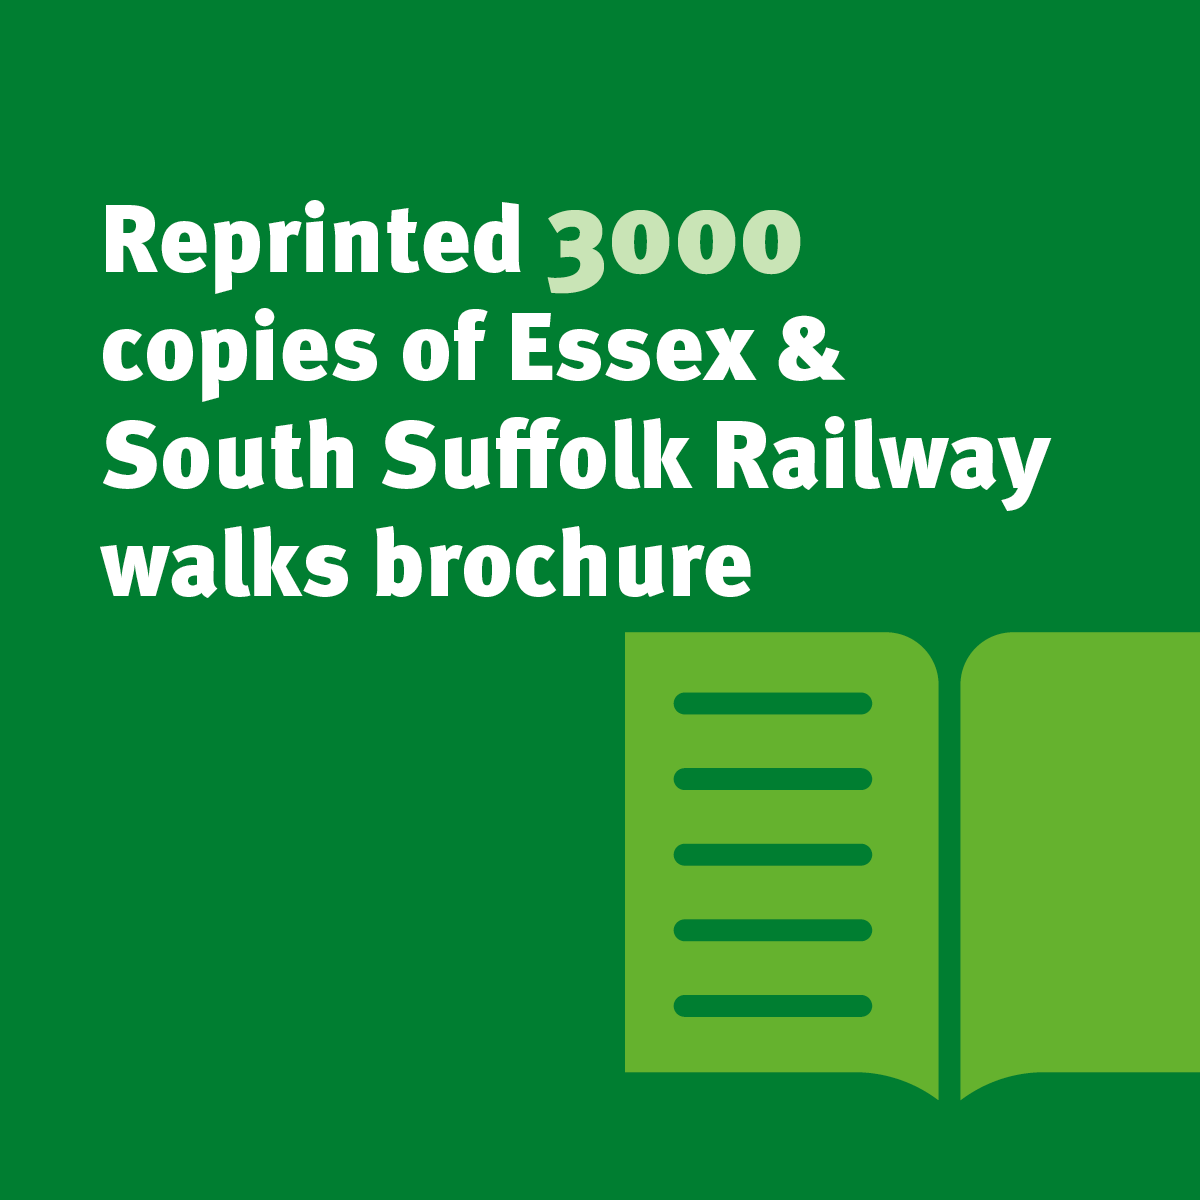 Reprinted 3000 copies of Essex & South Suffolk Railway walks brochure